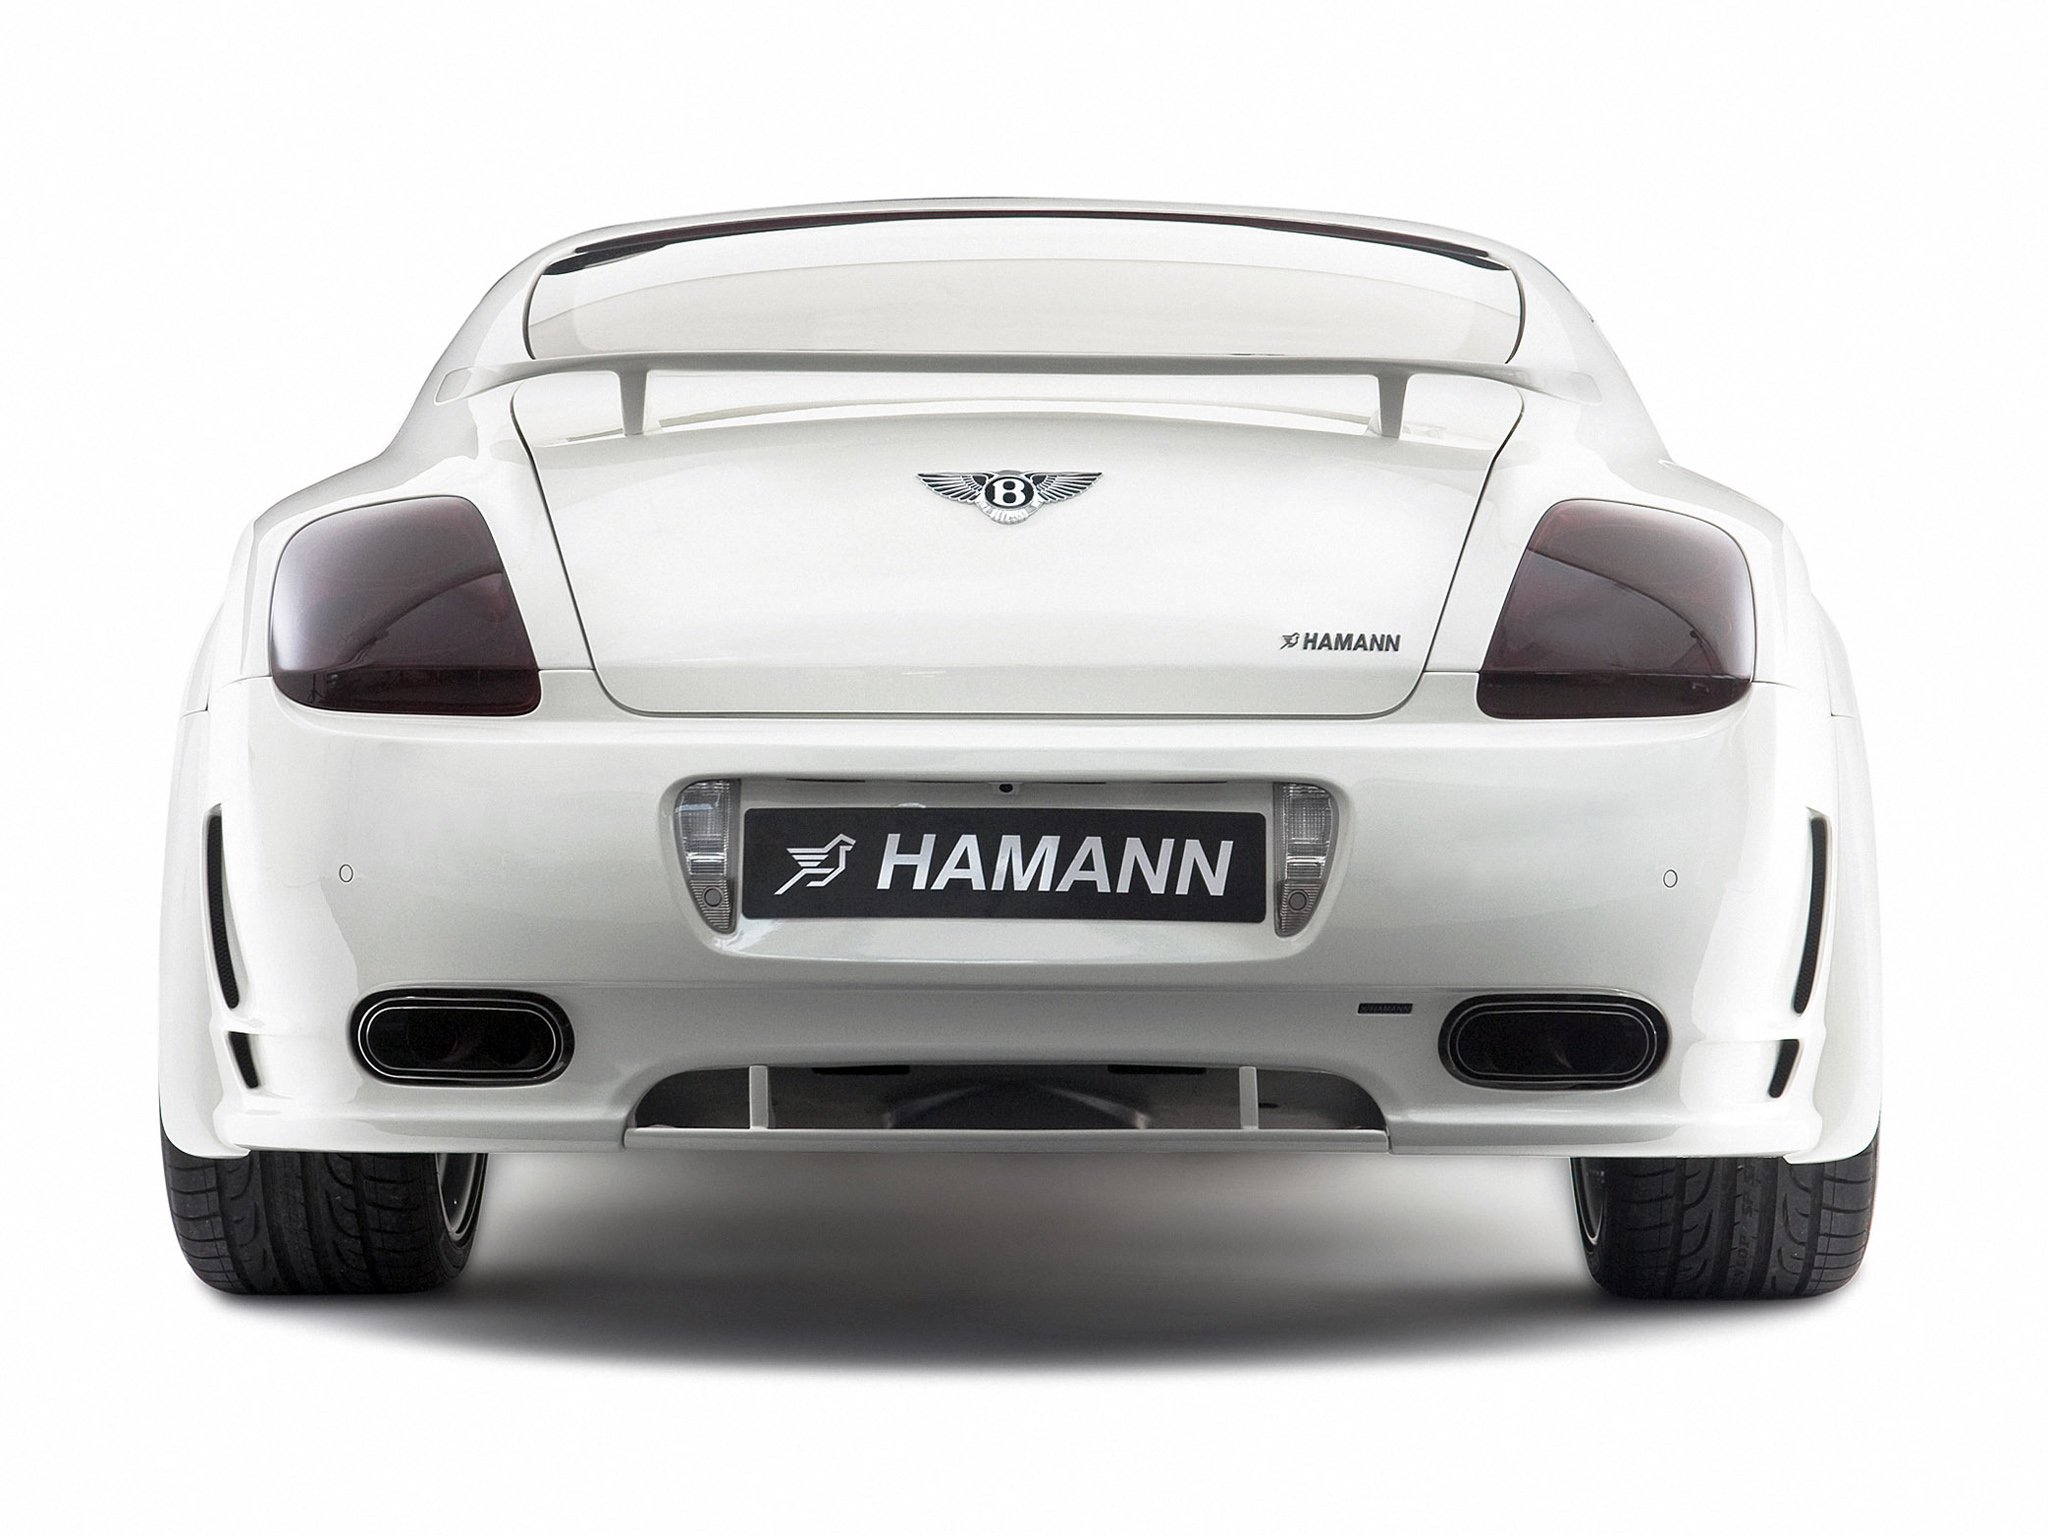 hamann, Bentley, Continental gt, Imperator, Cars, Modifided, 2009 Wallpaper